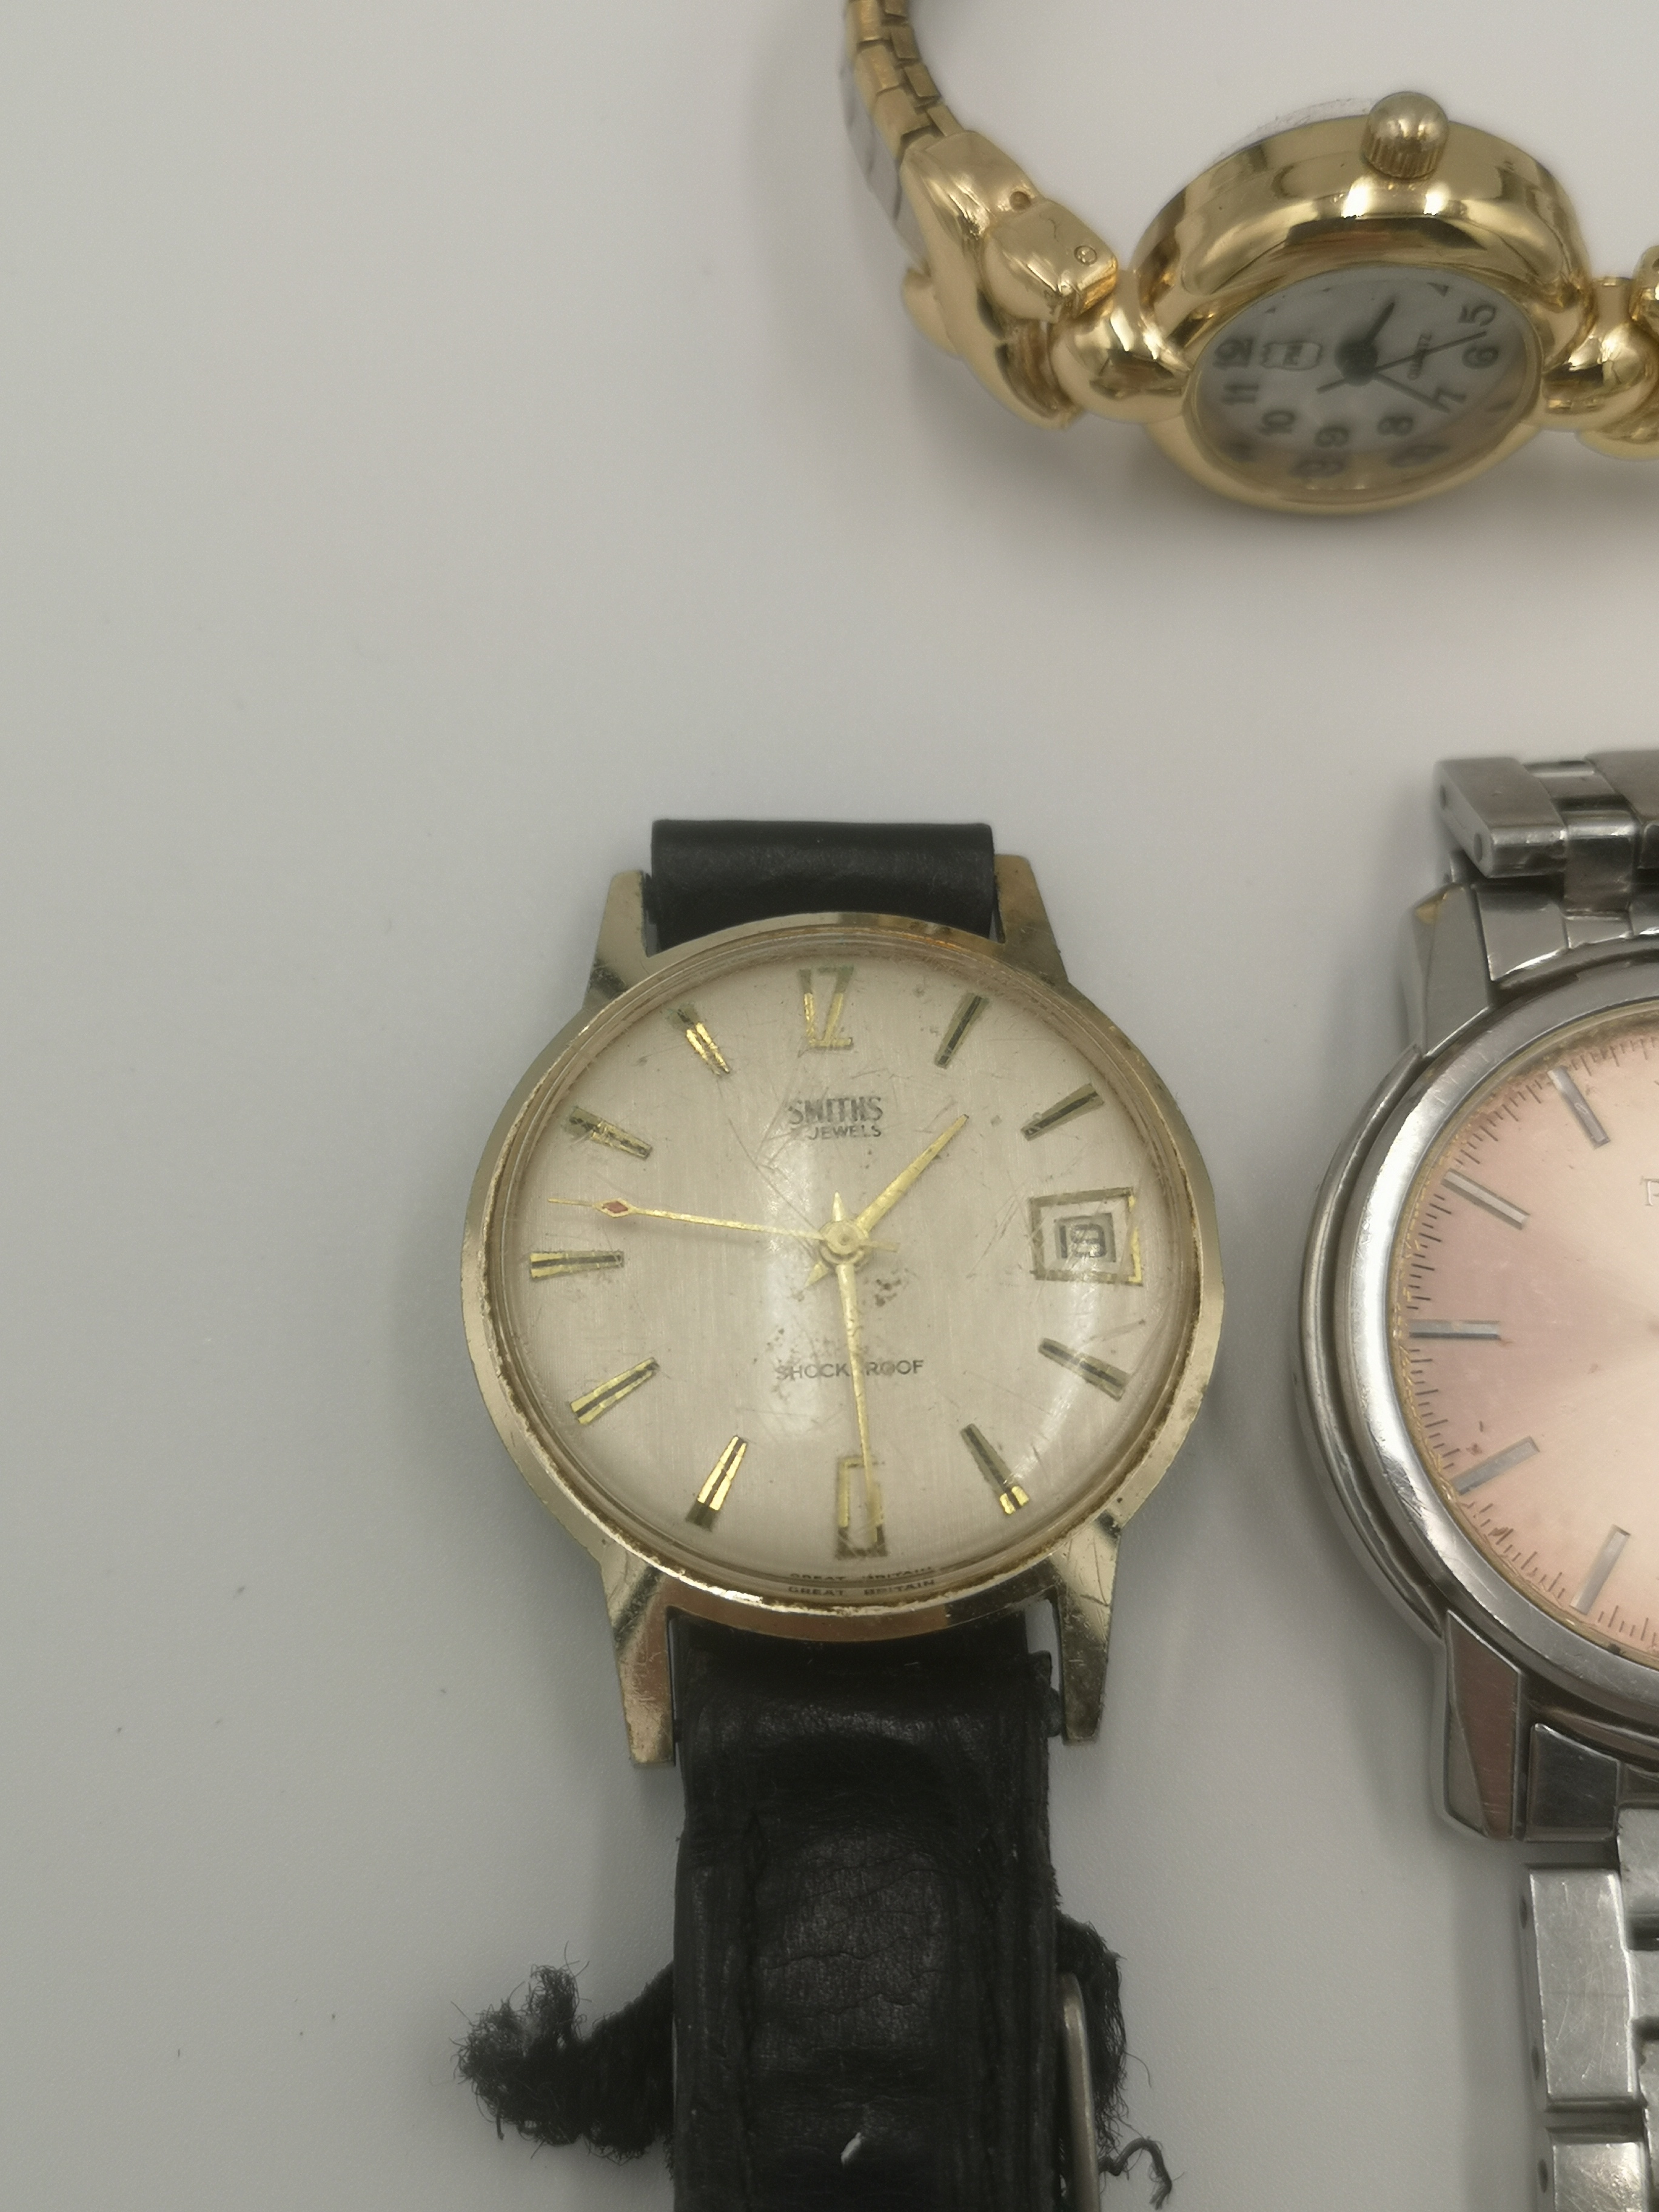 Roamer Premier Incabloc wrist watch in 9ct gold case - Image 6 of 6